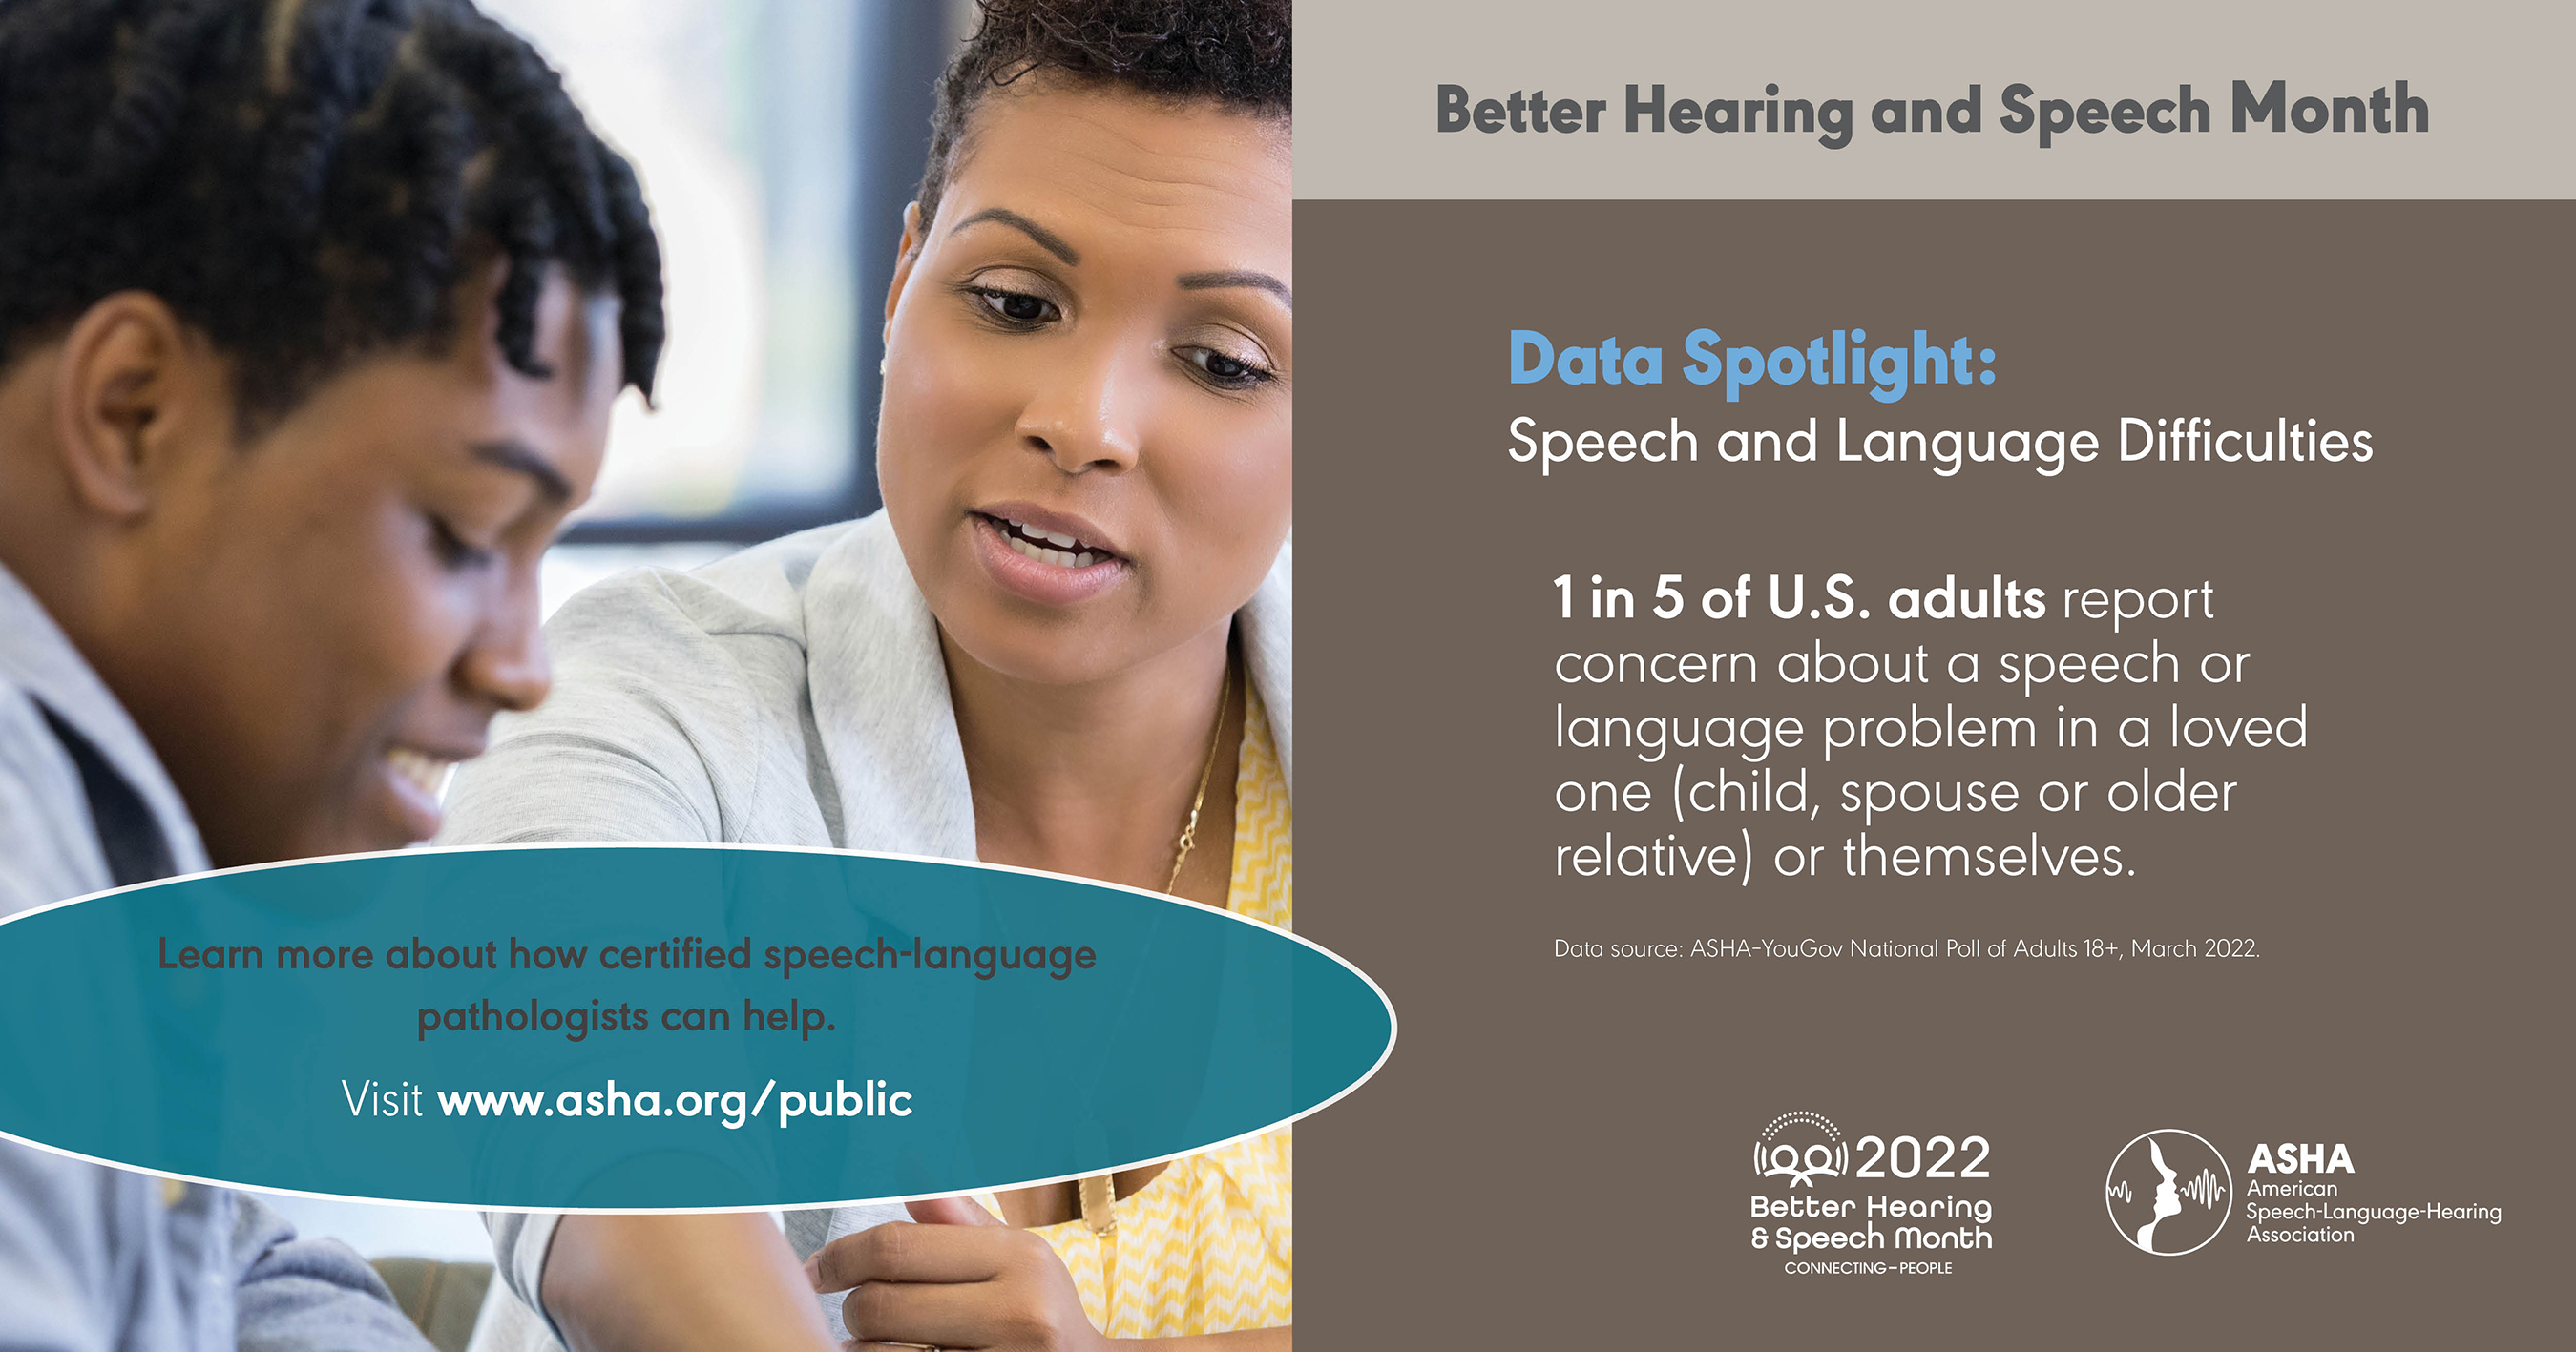 Data Spotlight: Concerns About Speech and Language